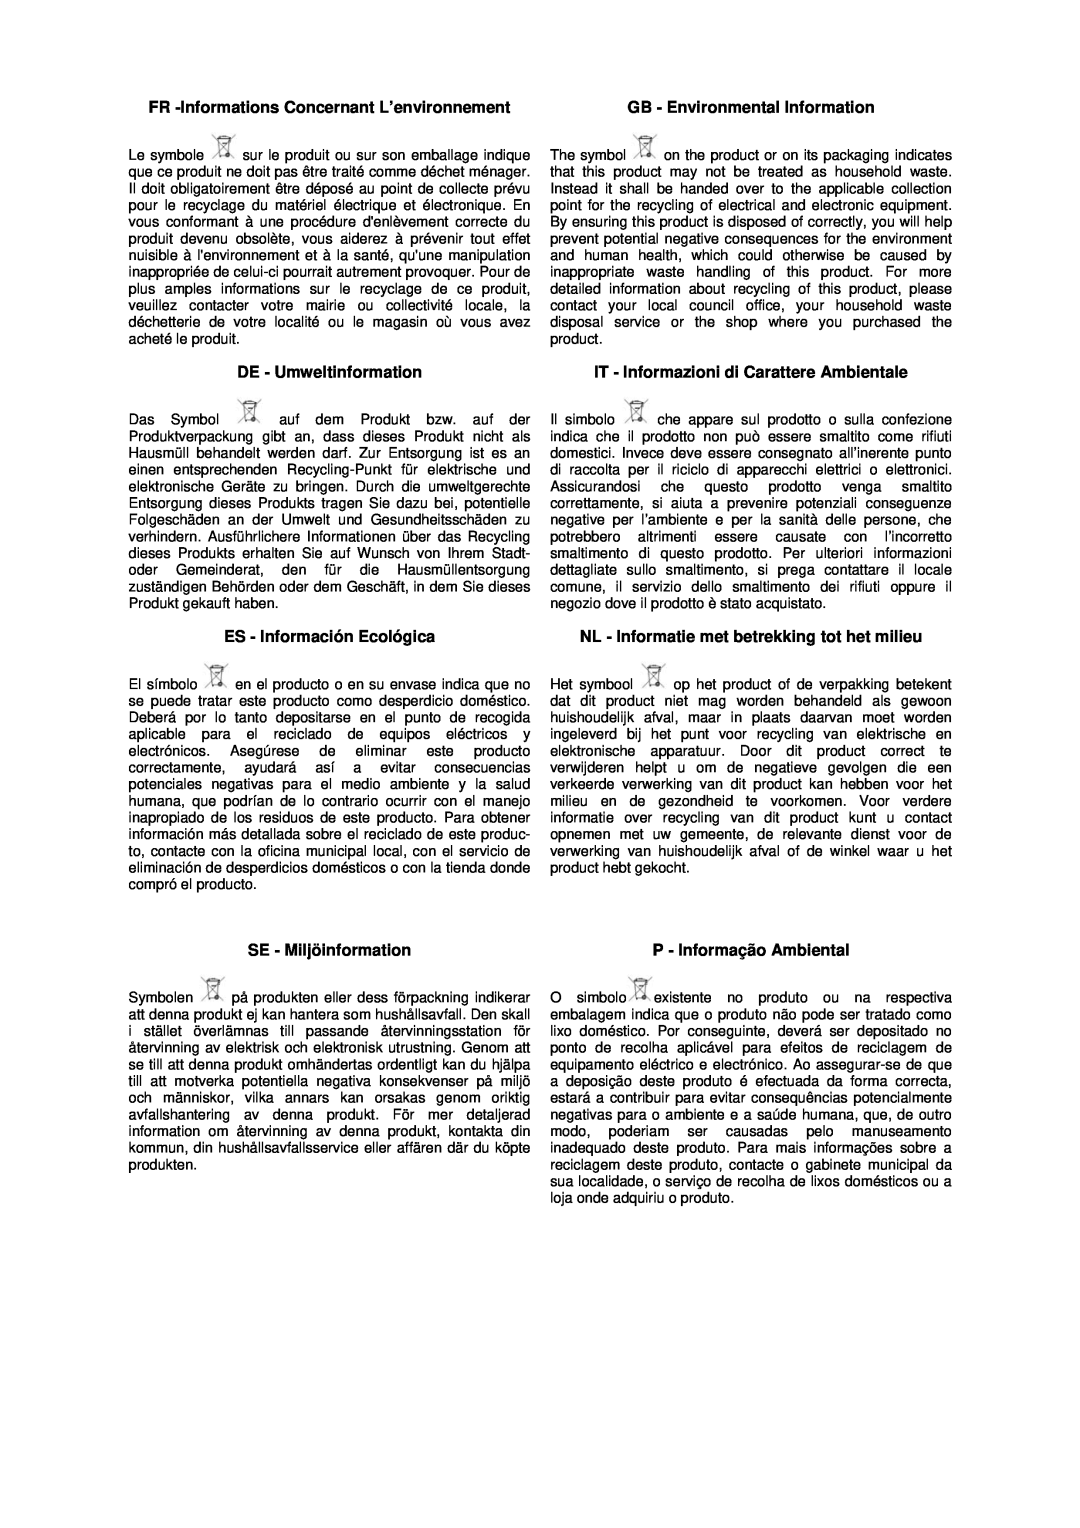 Husqvarna TS 600 M FR -Informations Concernant L’environnement, GB - Environmental Information, DE - Umweltinformation 